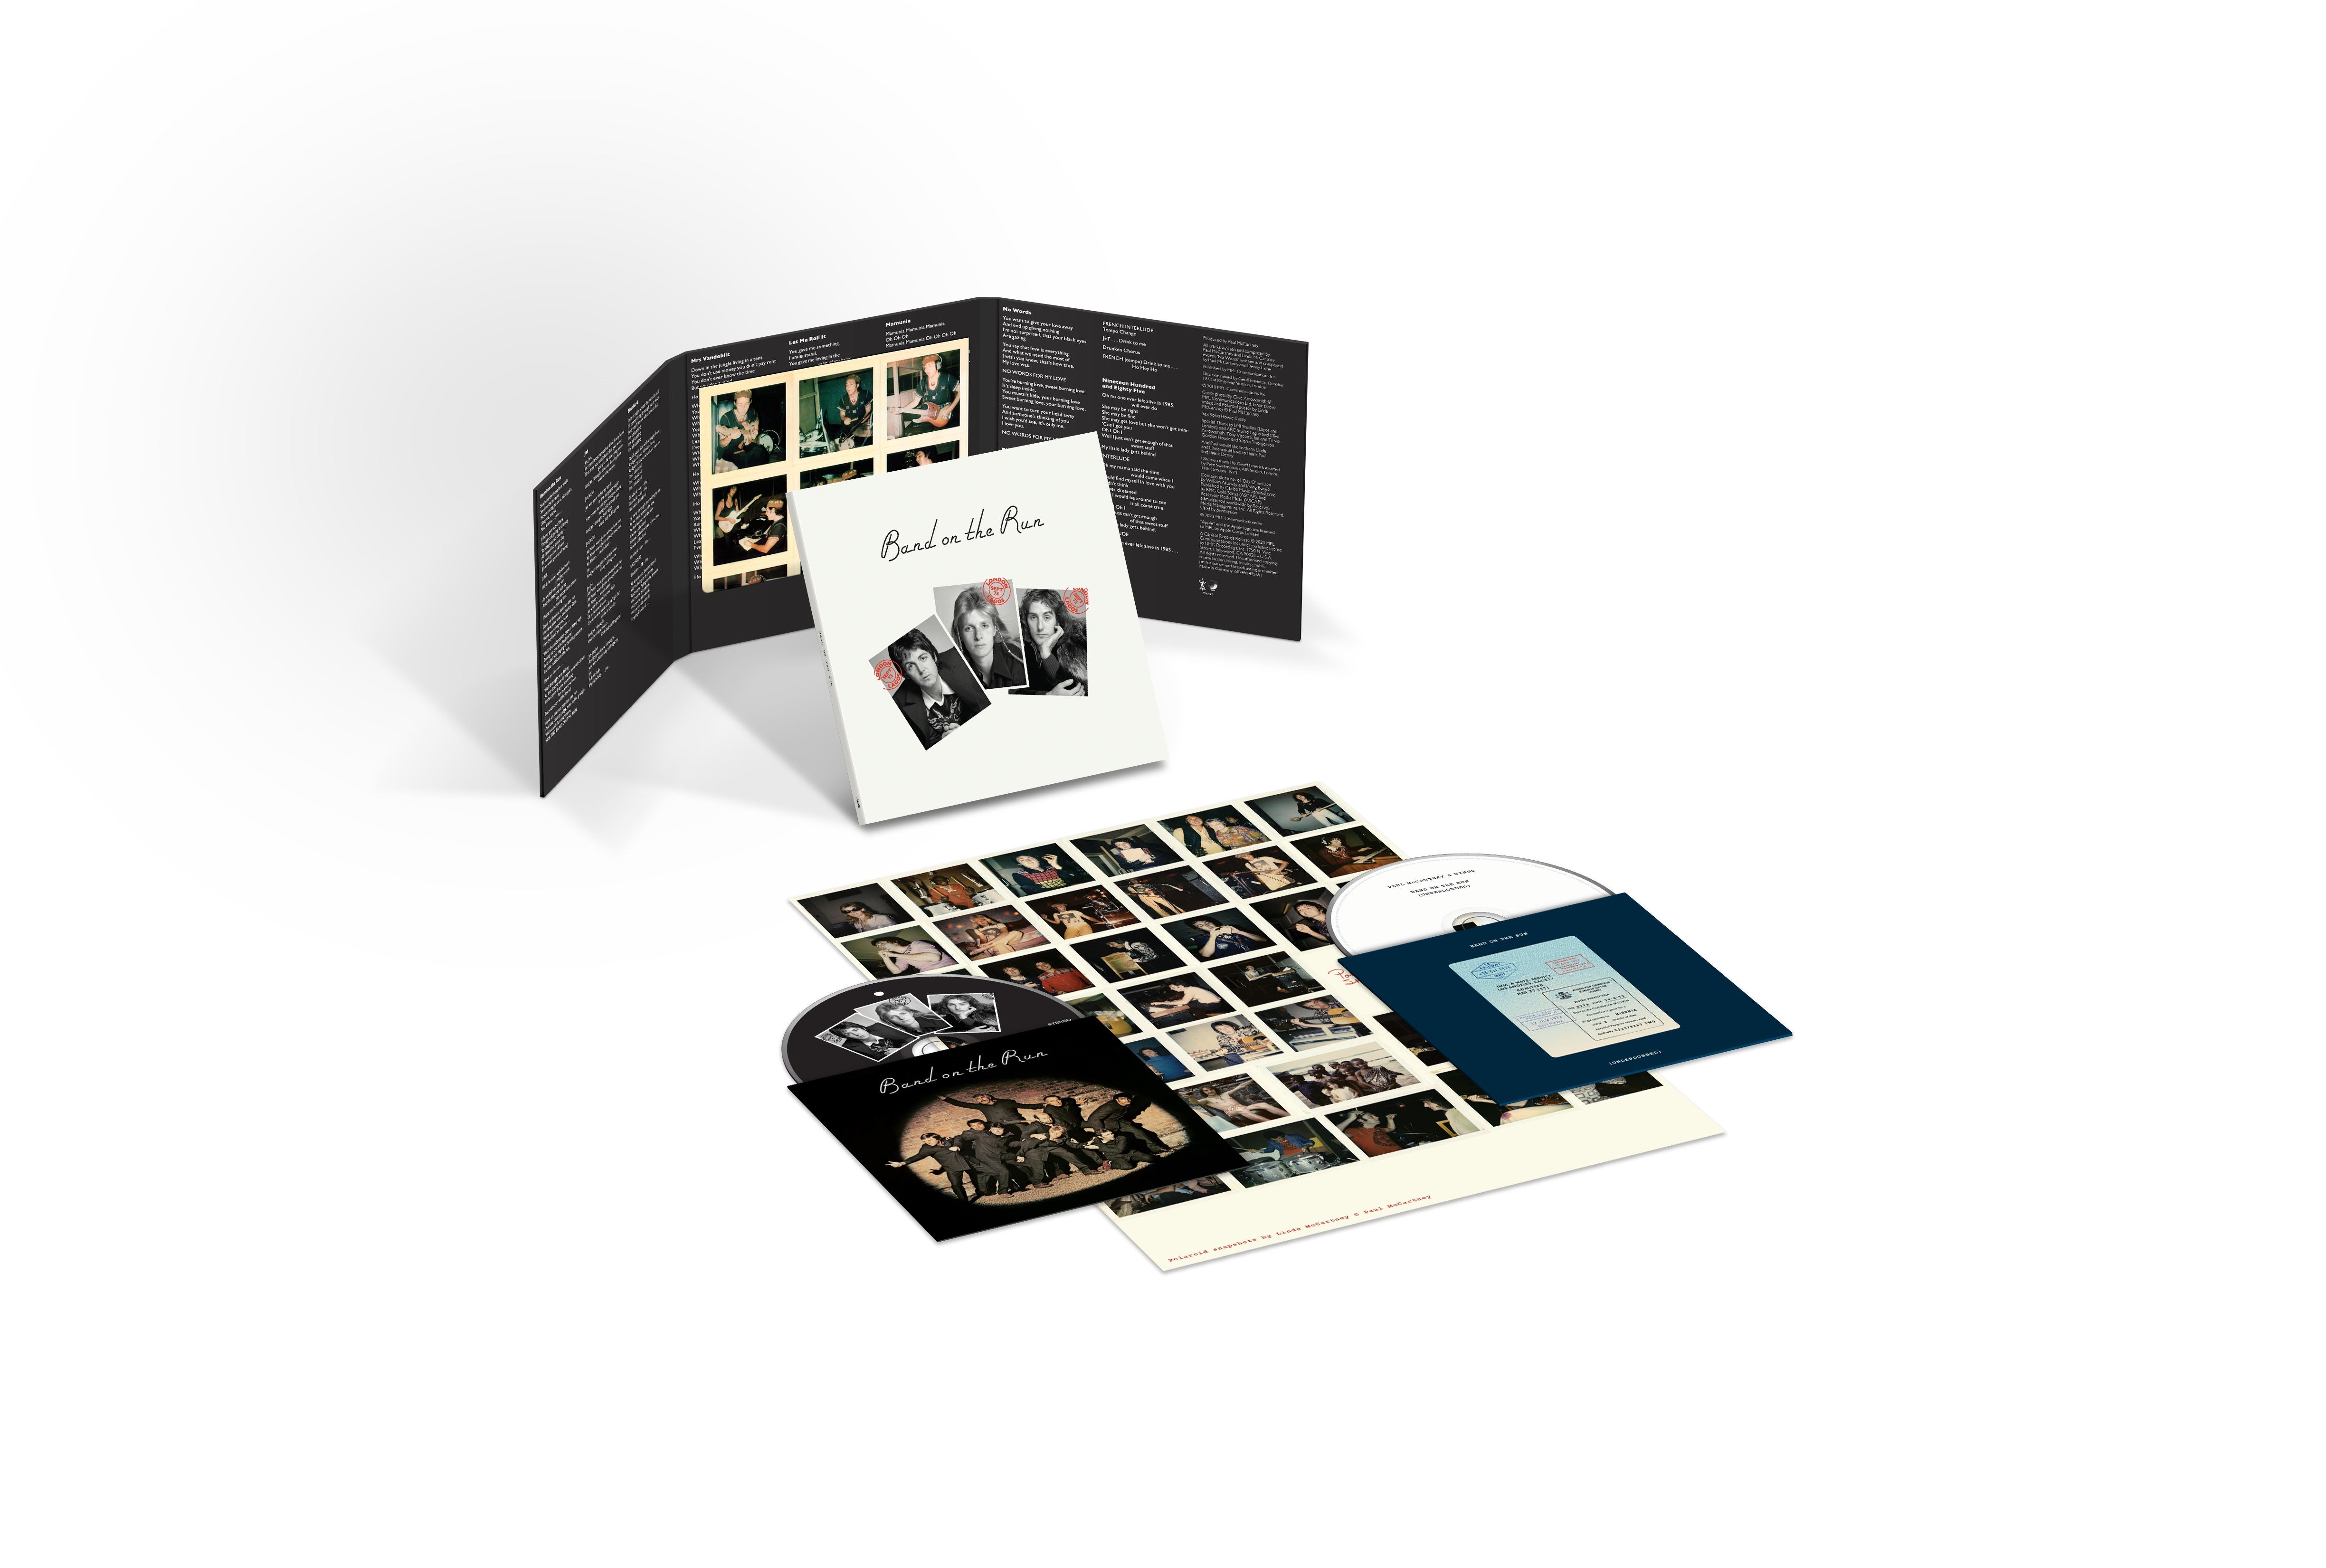 Paul McCartney & Wings | Band On The Run [Deluxe 2 CD] | CD